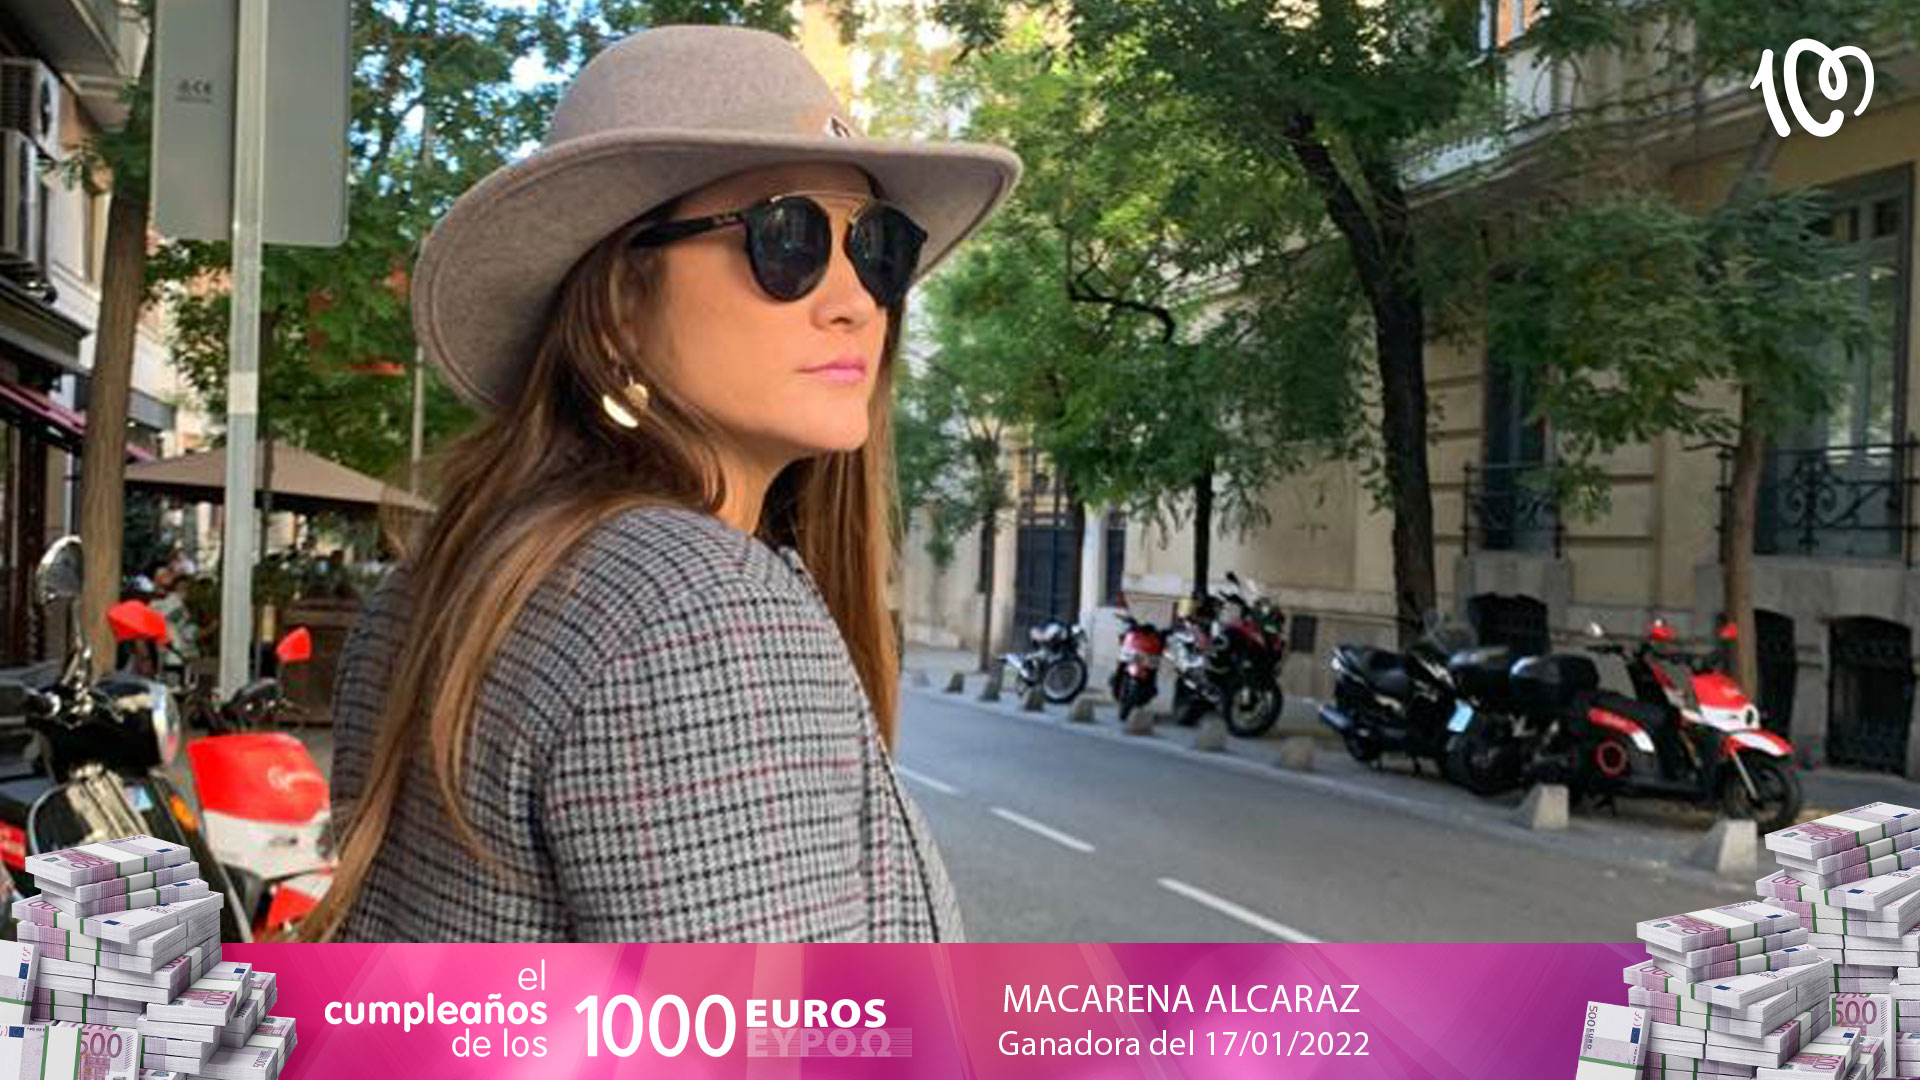 Macarena Alcaraz, ganadora de 1.000 euros: "¡Una mañana de suerte!"